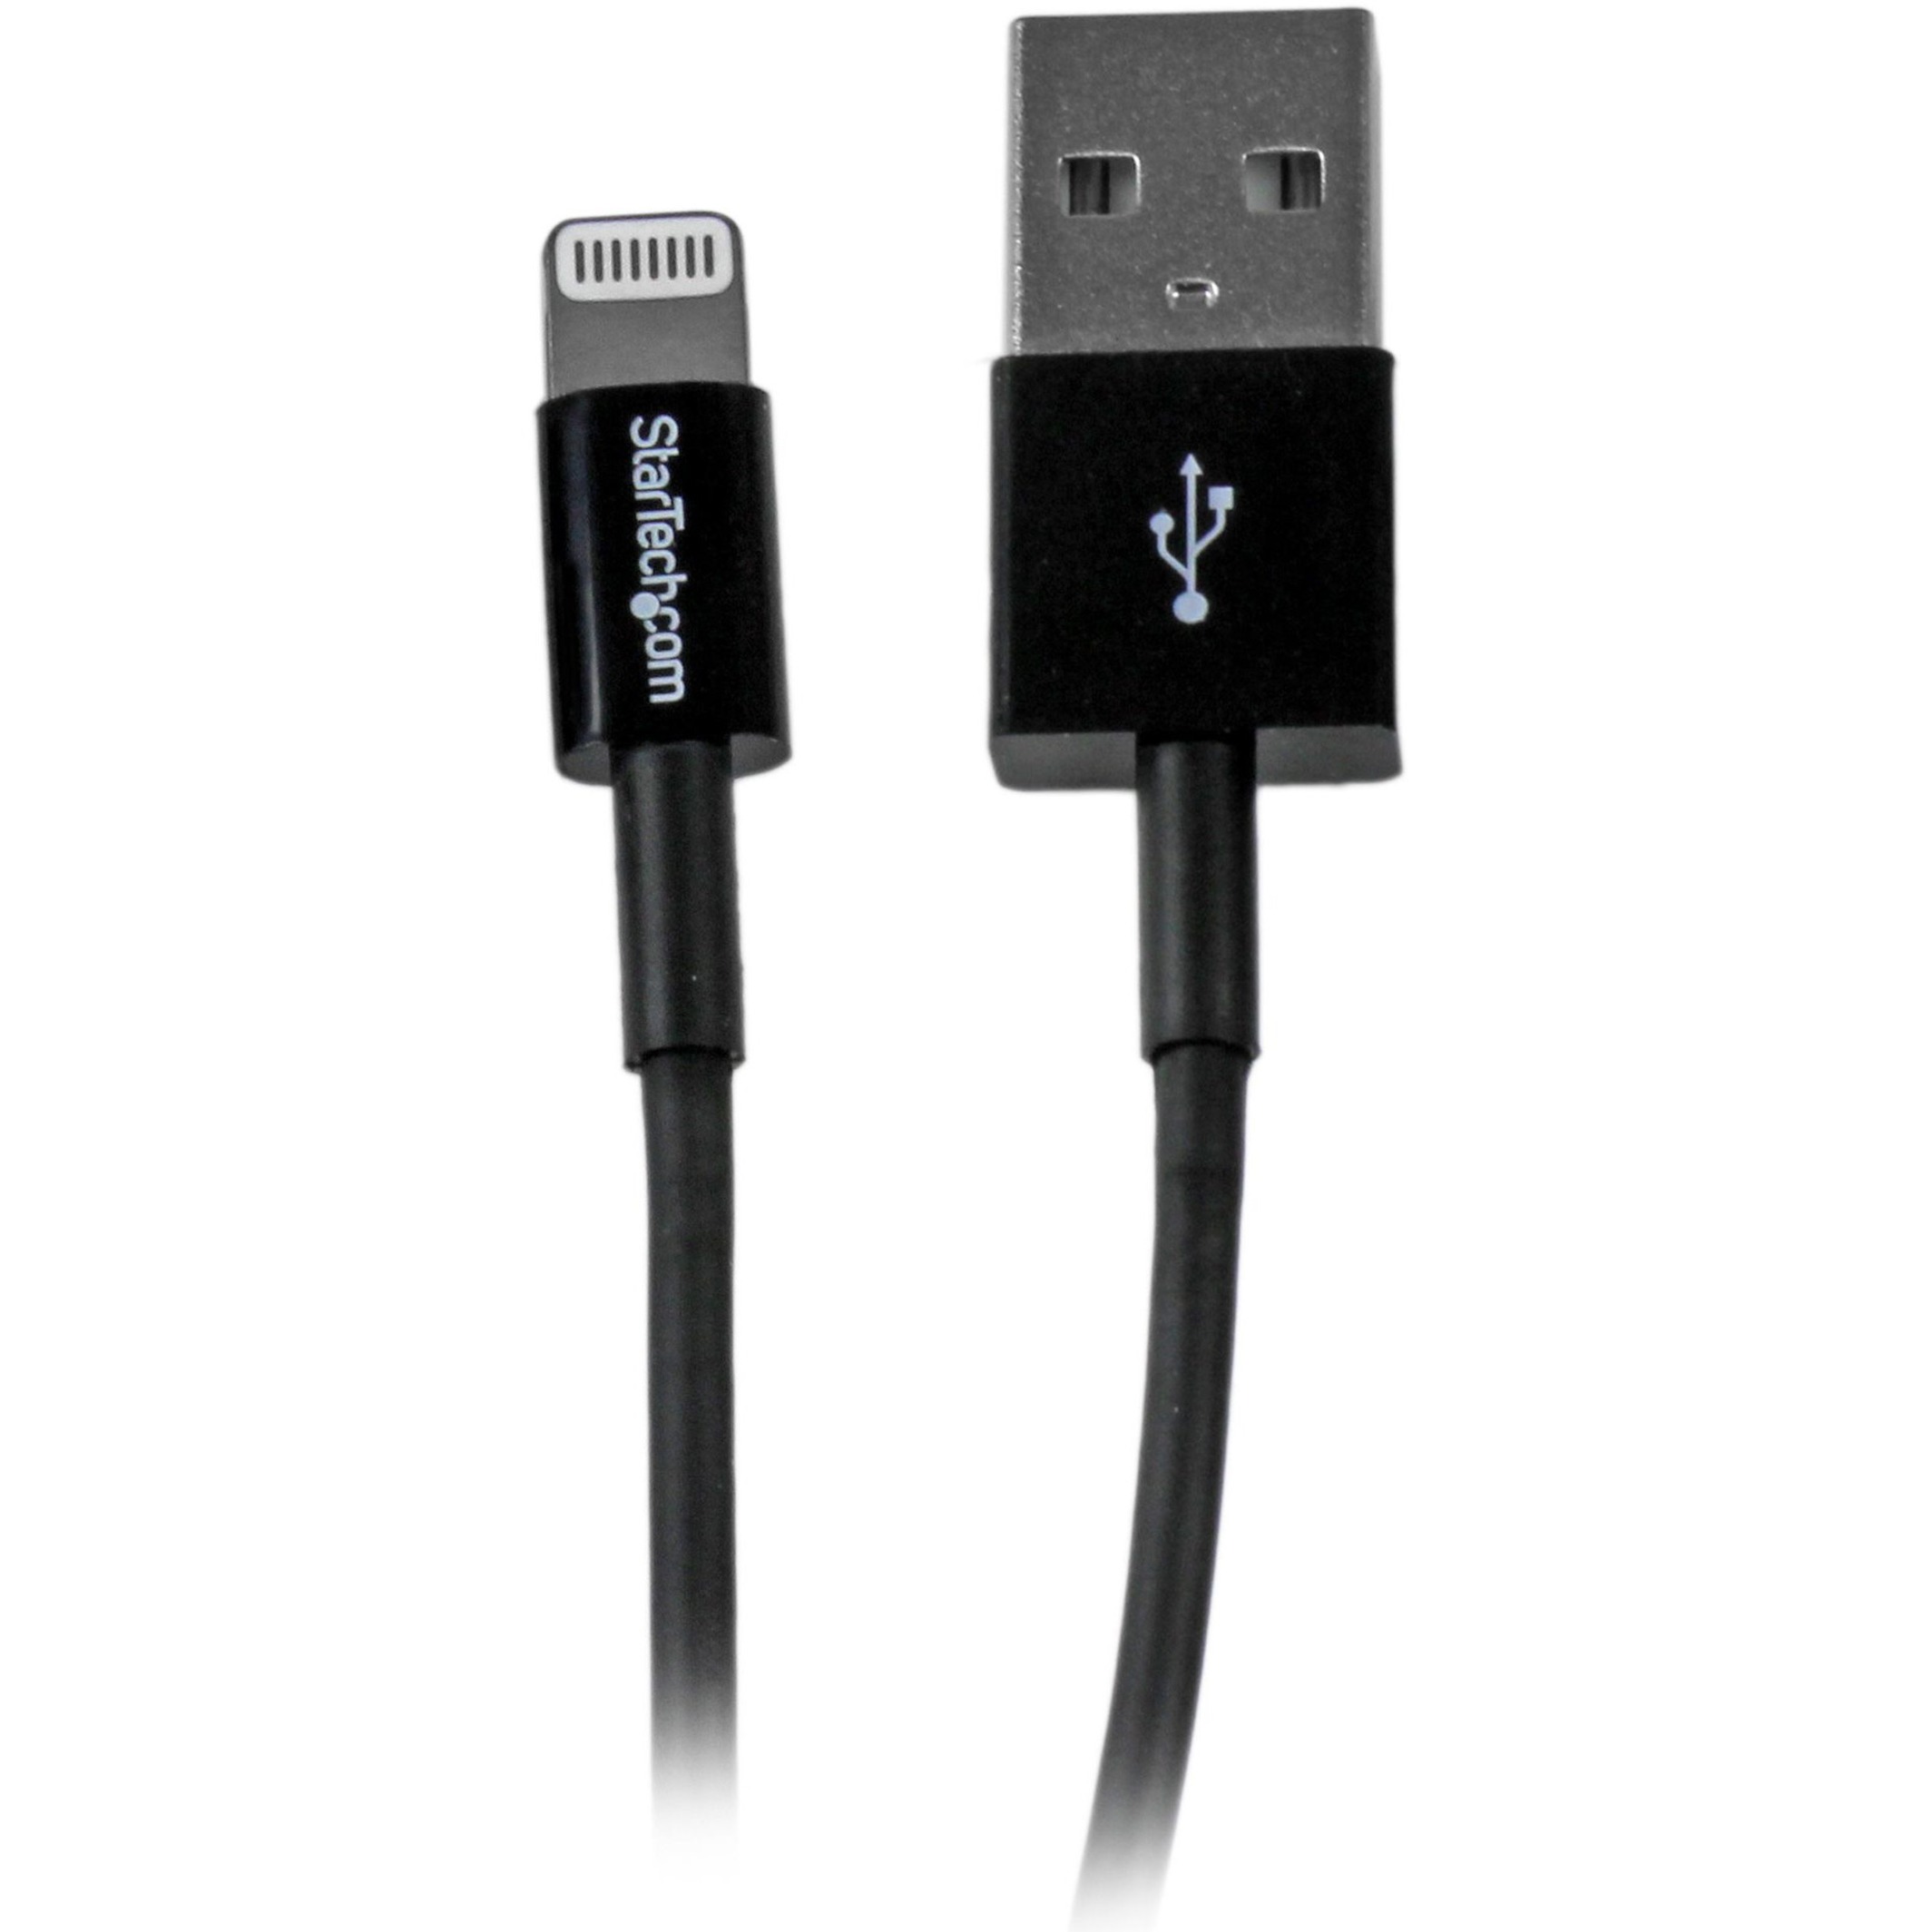 Startech USBLT1MBS USB to Lightning Cable Apple MFi Certified Slim 1 m (3 ft.) Black - image 1 of 4